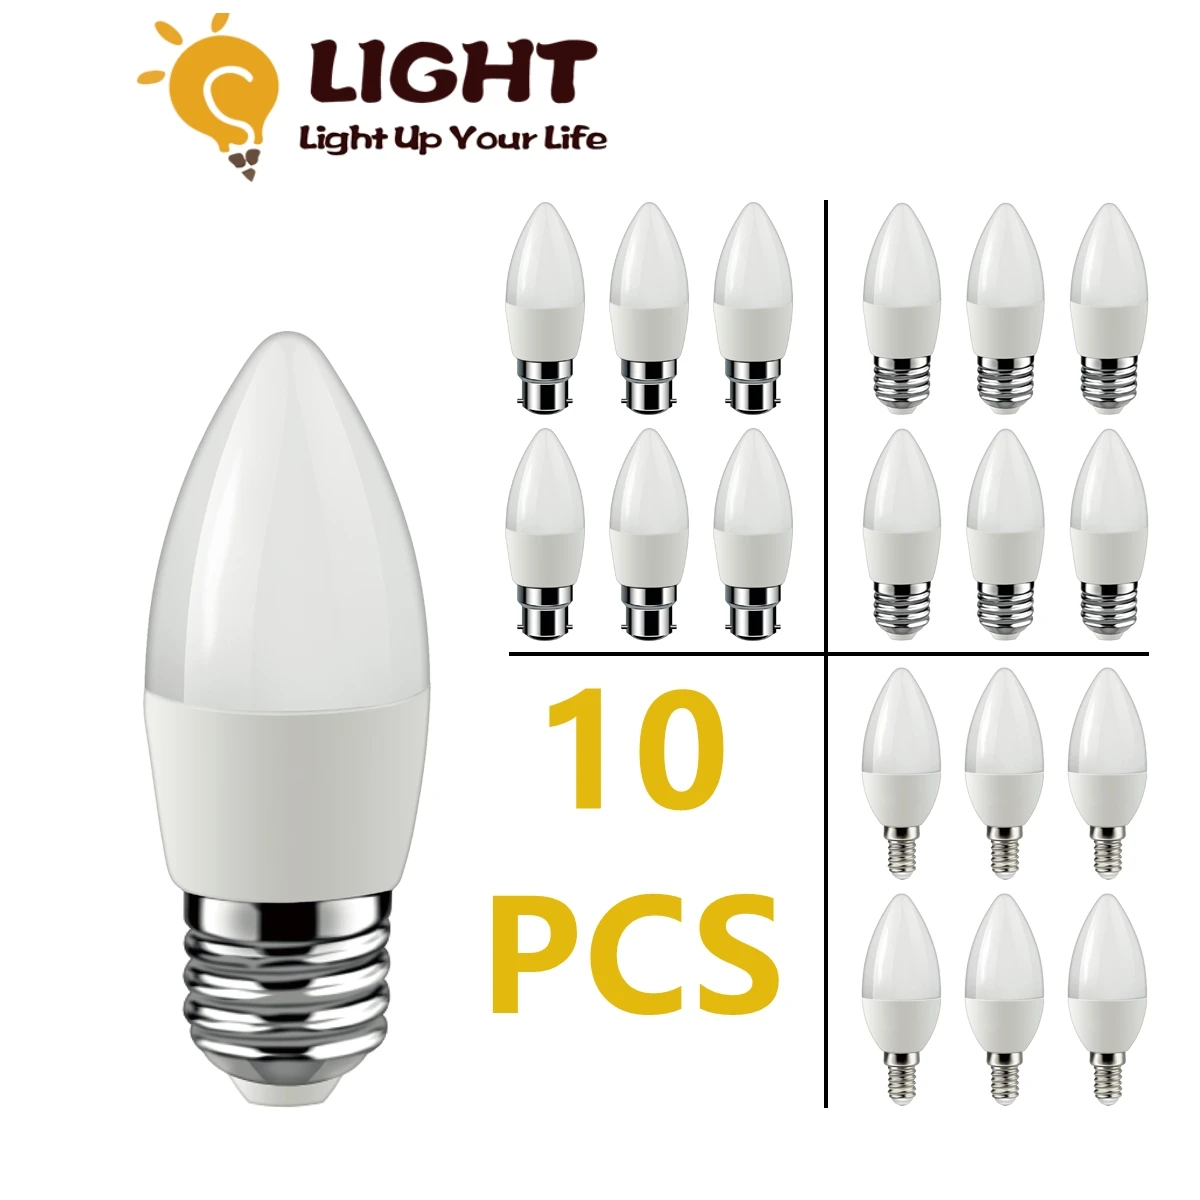 10pcs/lot E27 E14 Led Bulb filament G45 Lamp 220v 230v 240v AC Small Bulbs  lights Warm White/Cold White Super bright Edison bulb